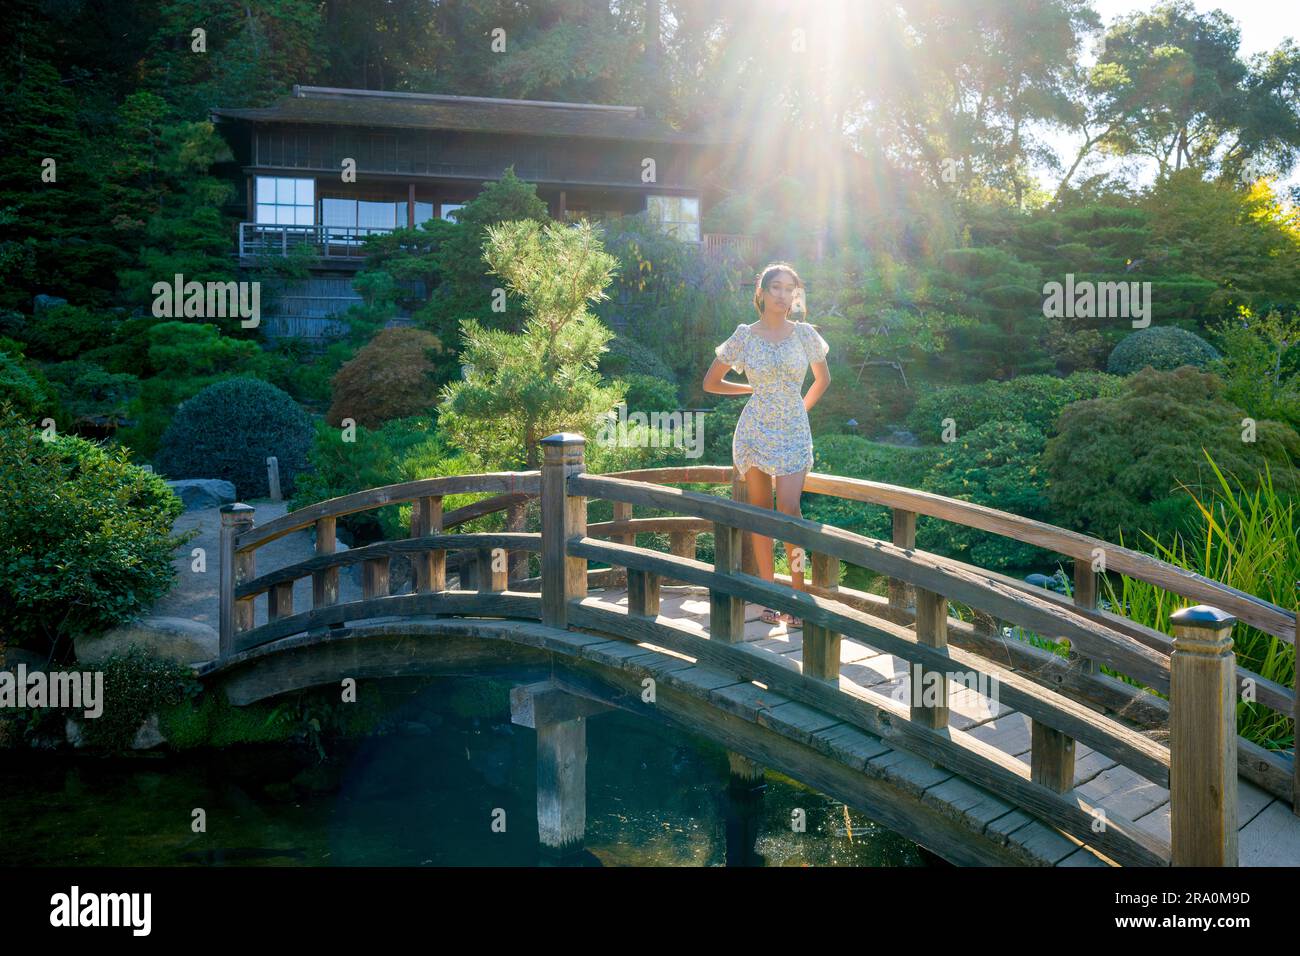 Teenage Girl in Summer Dress Standing on Bridge | Hashi | Backlit | Natural Light Stock Photo